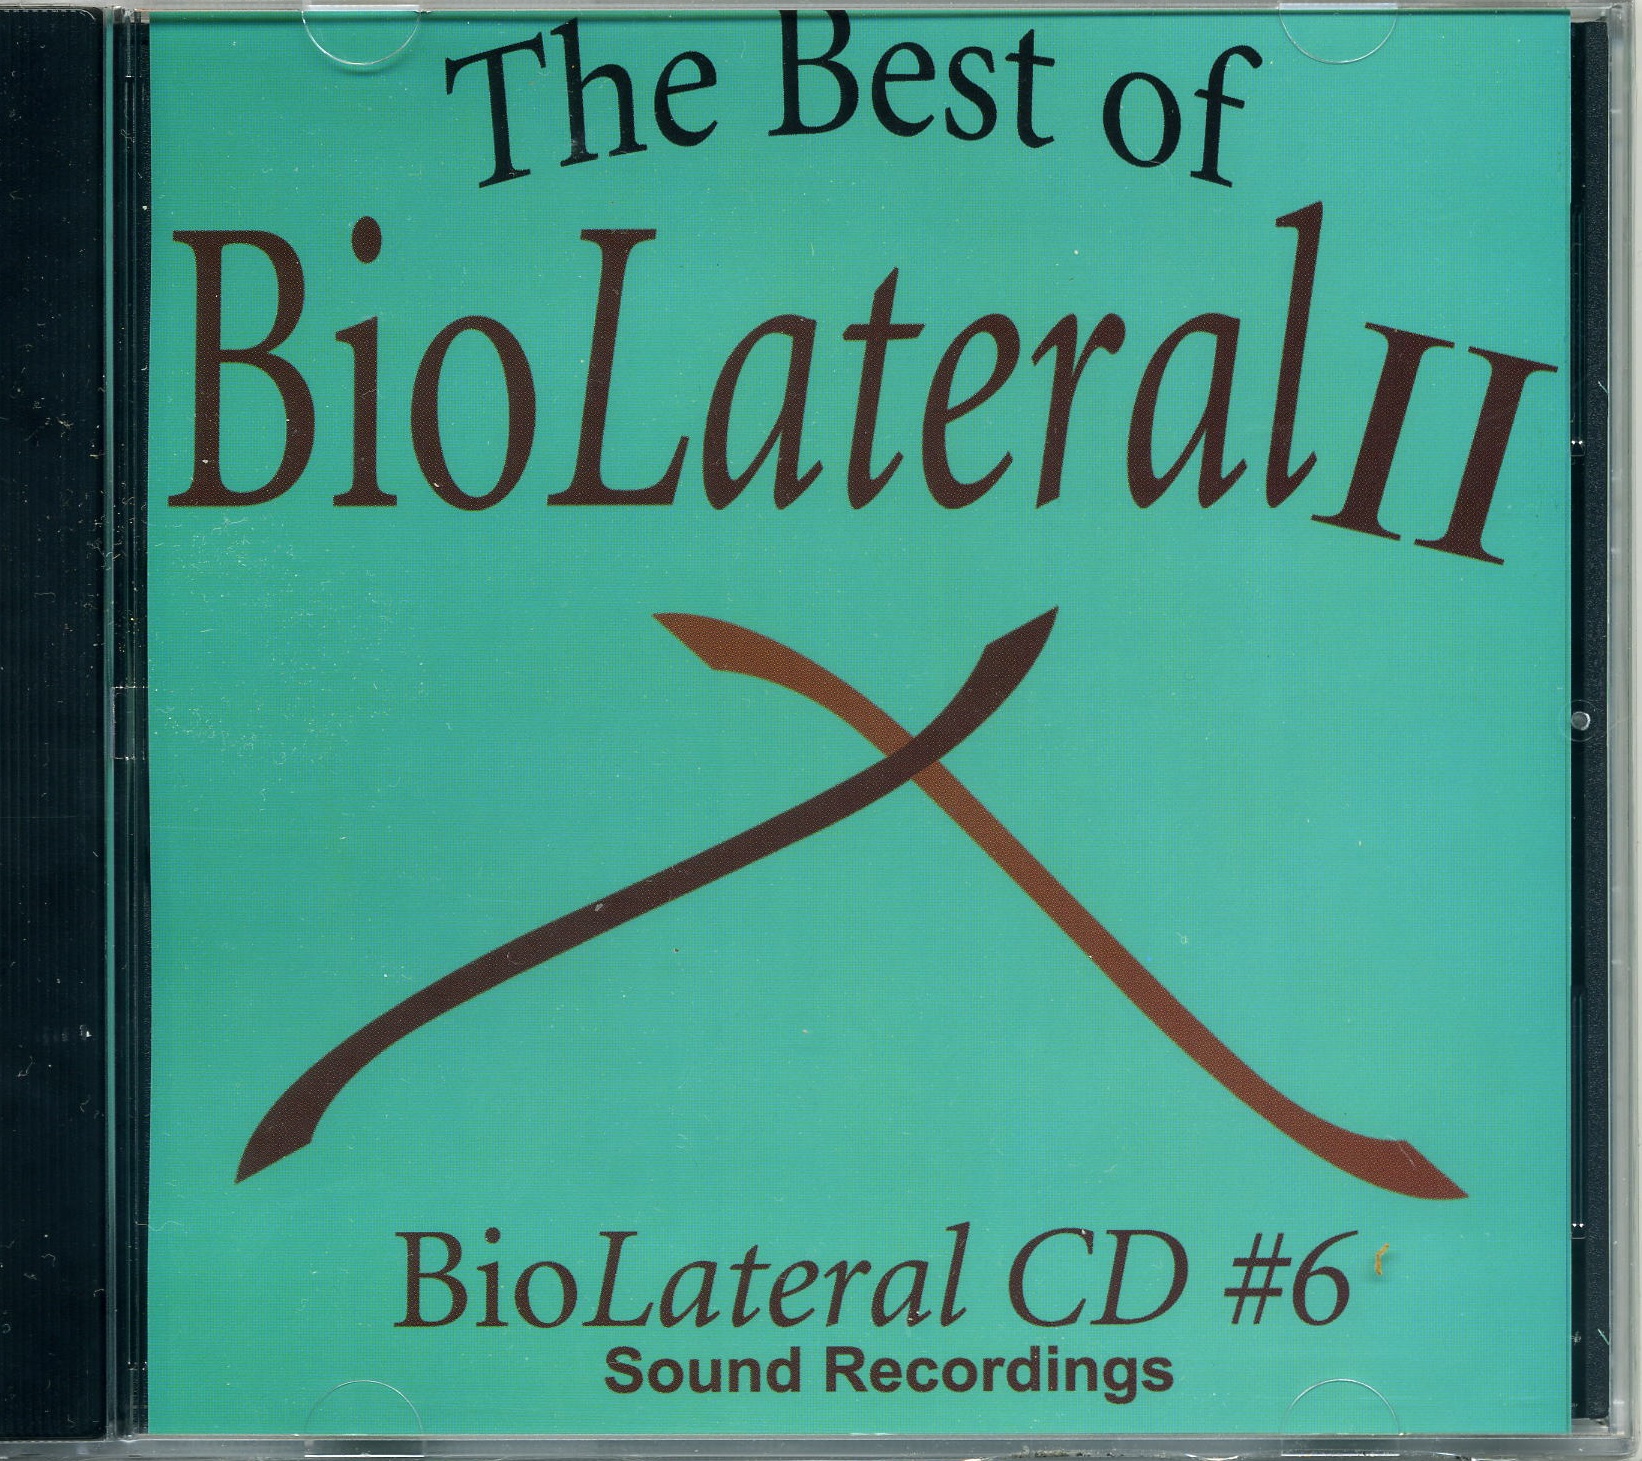 David Grand - The Best Of BioLateral II